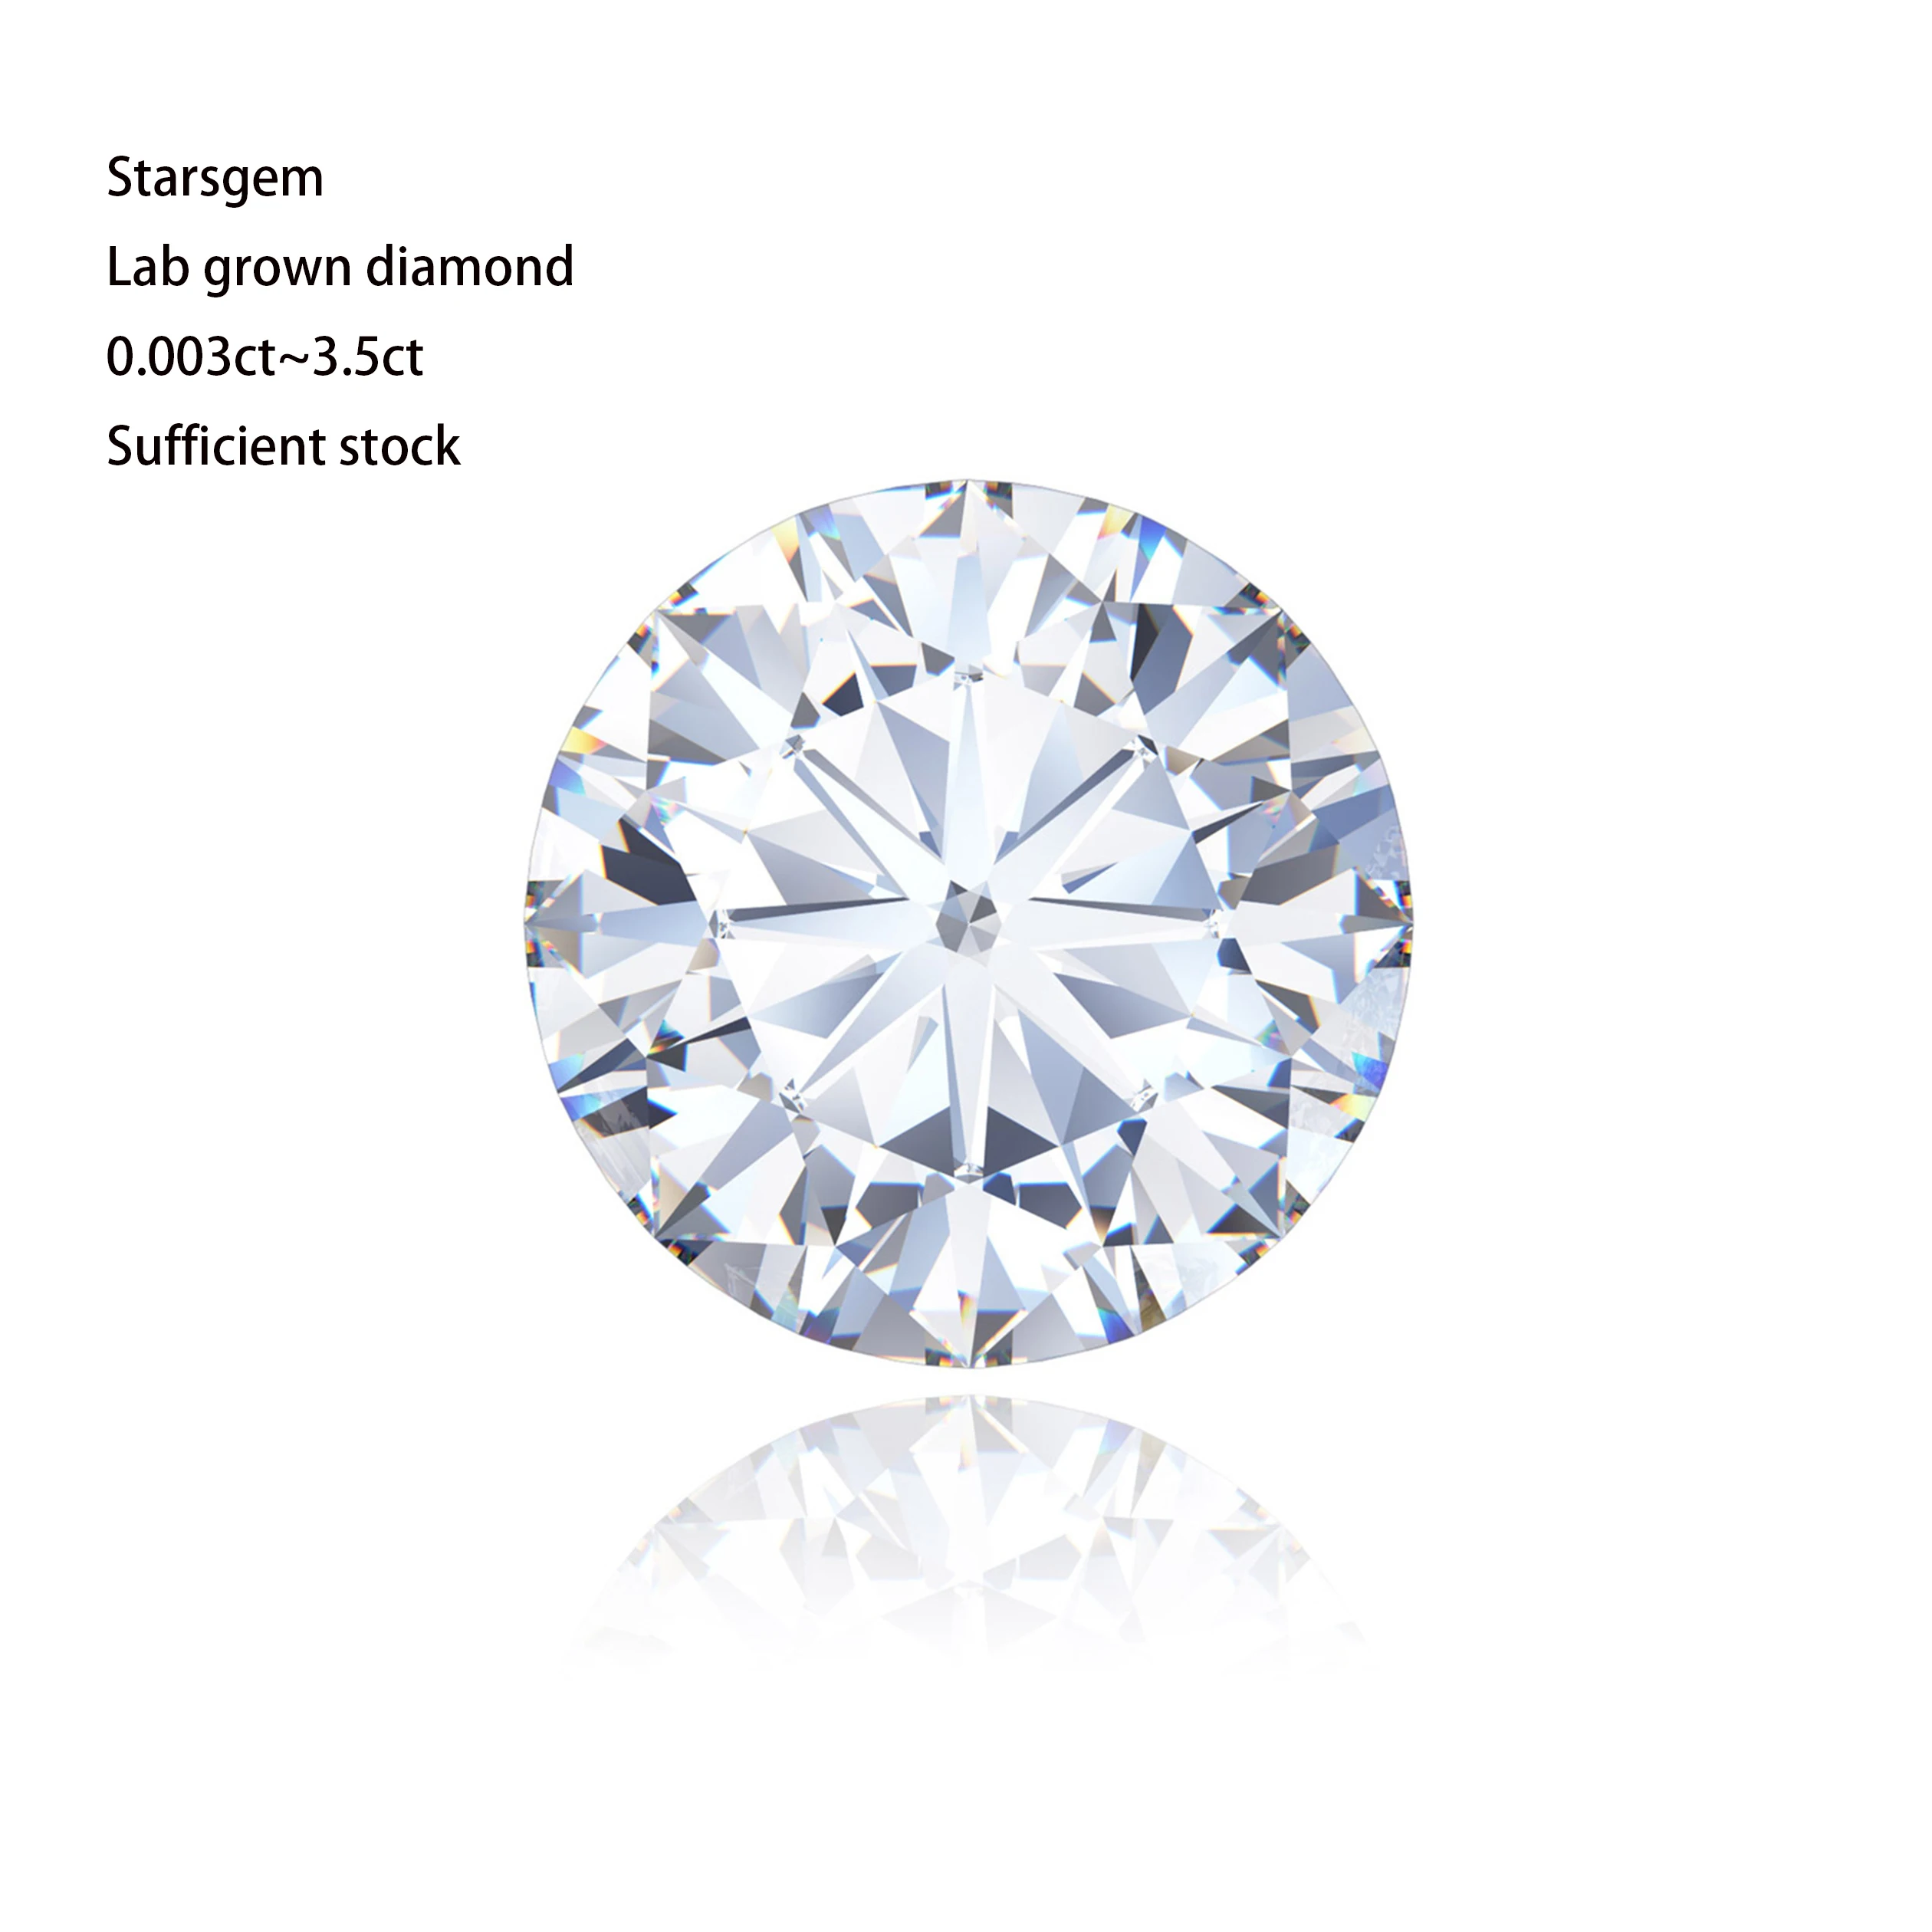 

Starsgem 1ct DEF color VS clarity lab grown diamonds excellent cut HPHT CVD diamond